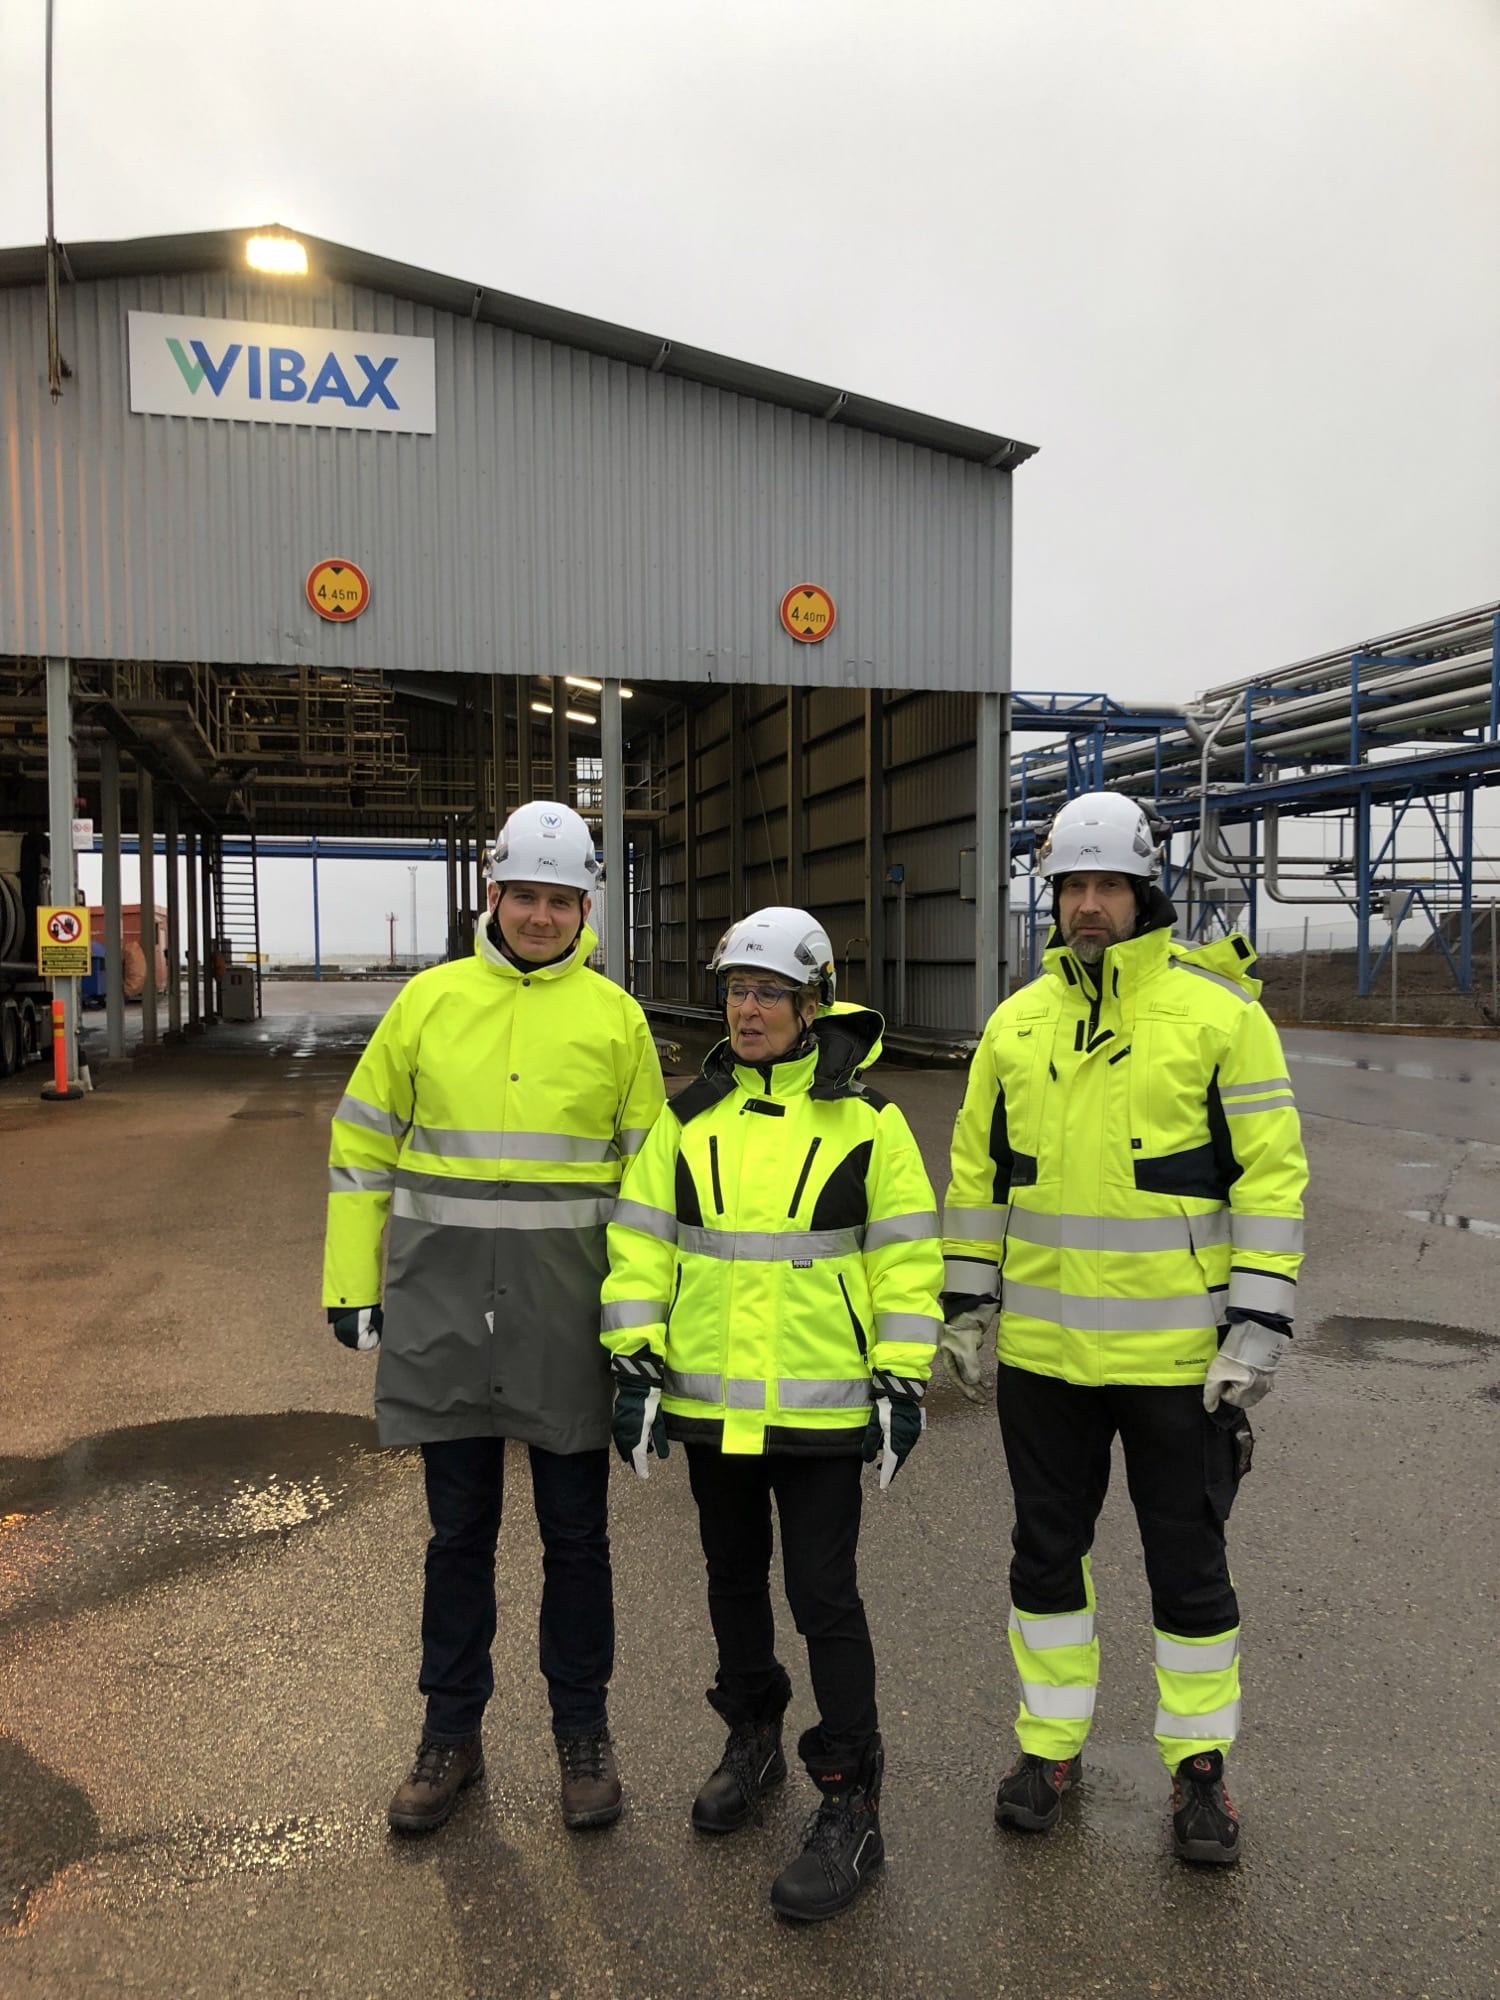 Wibax Logistics Oy:s verkställande direktör Olli Paasio, regionchef Marja Pönkä och terminalchef Harri Metsola